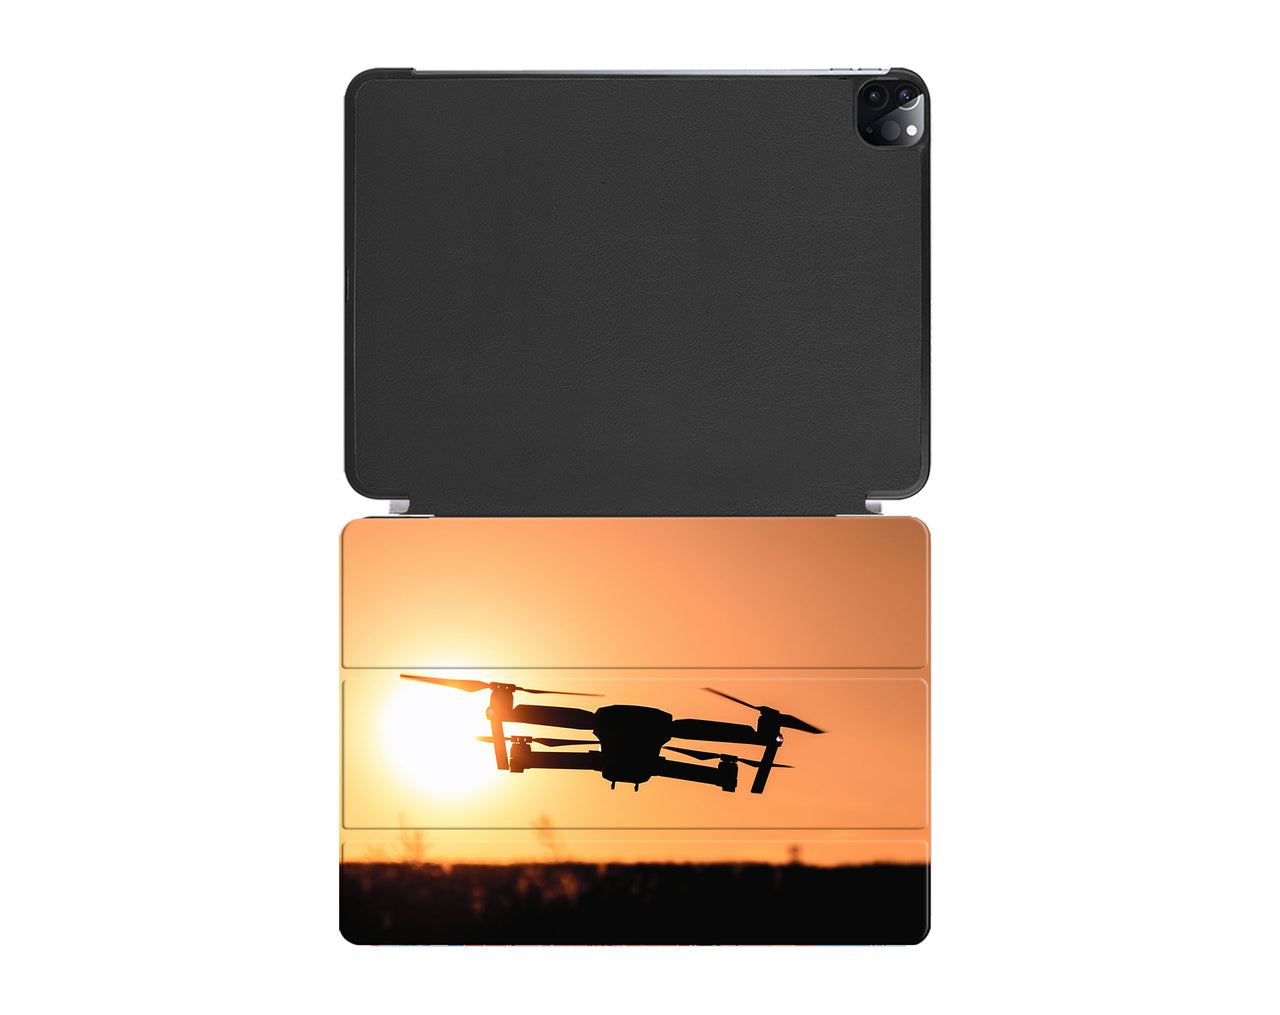 Amazing Drone in Sunset Designed iPad Cases